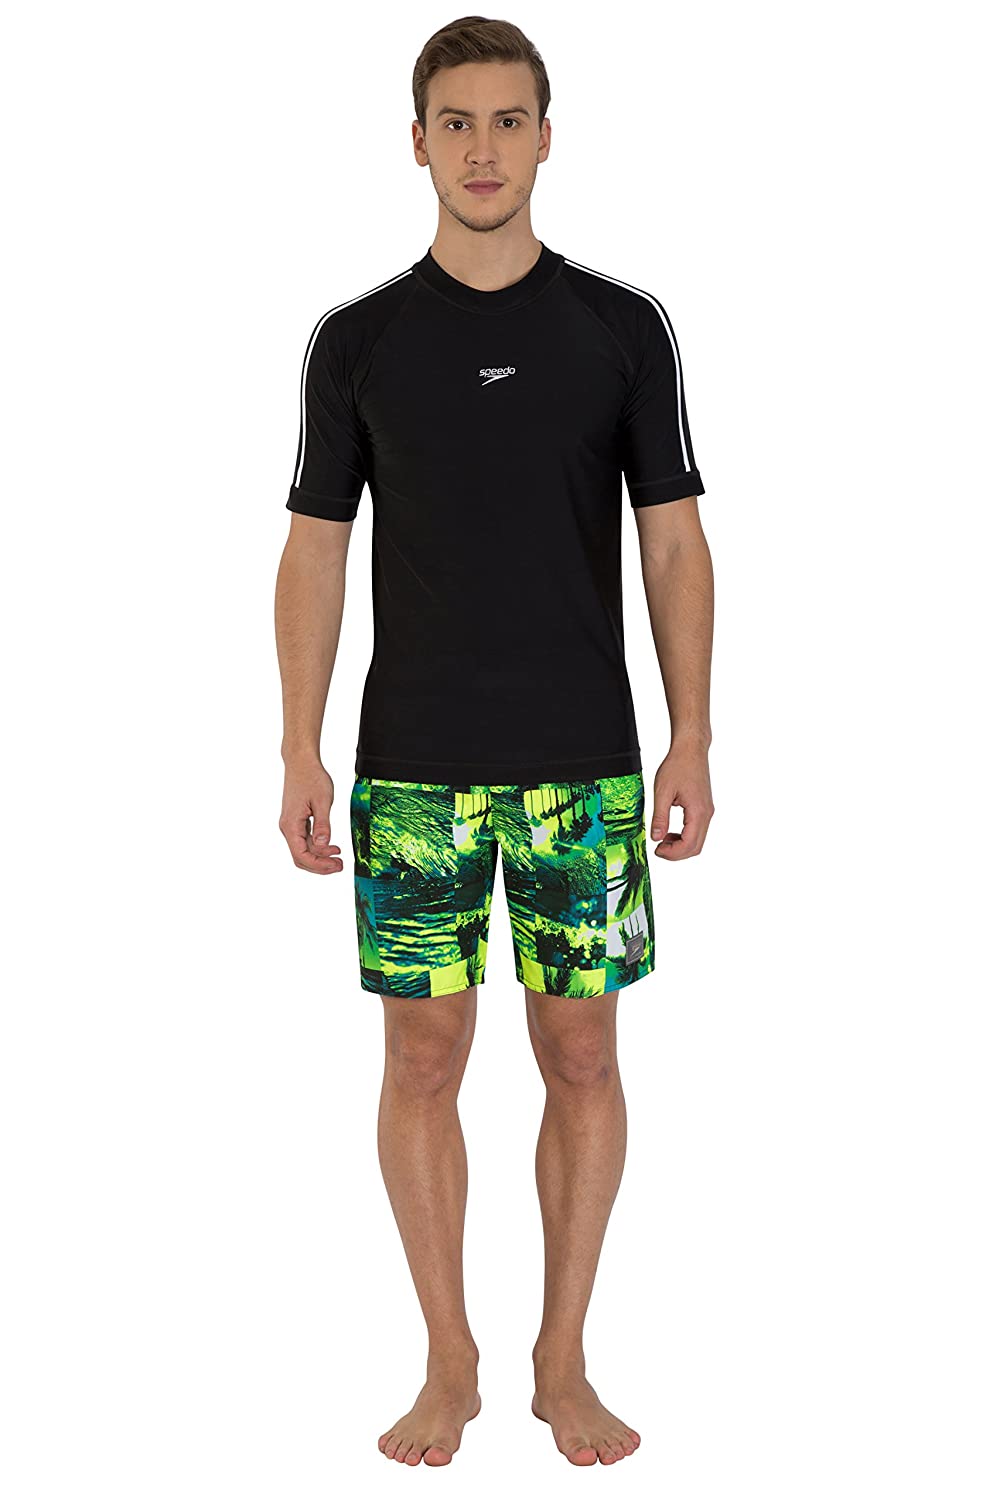 Speedo Male Swimwear Short Sleeve Suntop - Best Price online Prokicksports.com